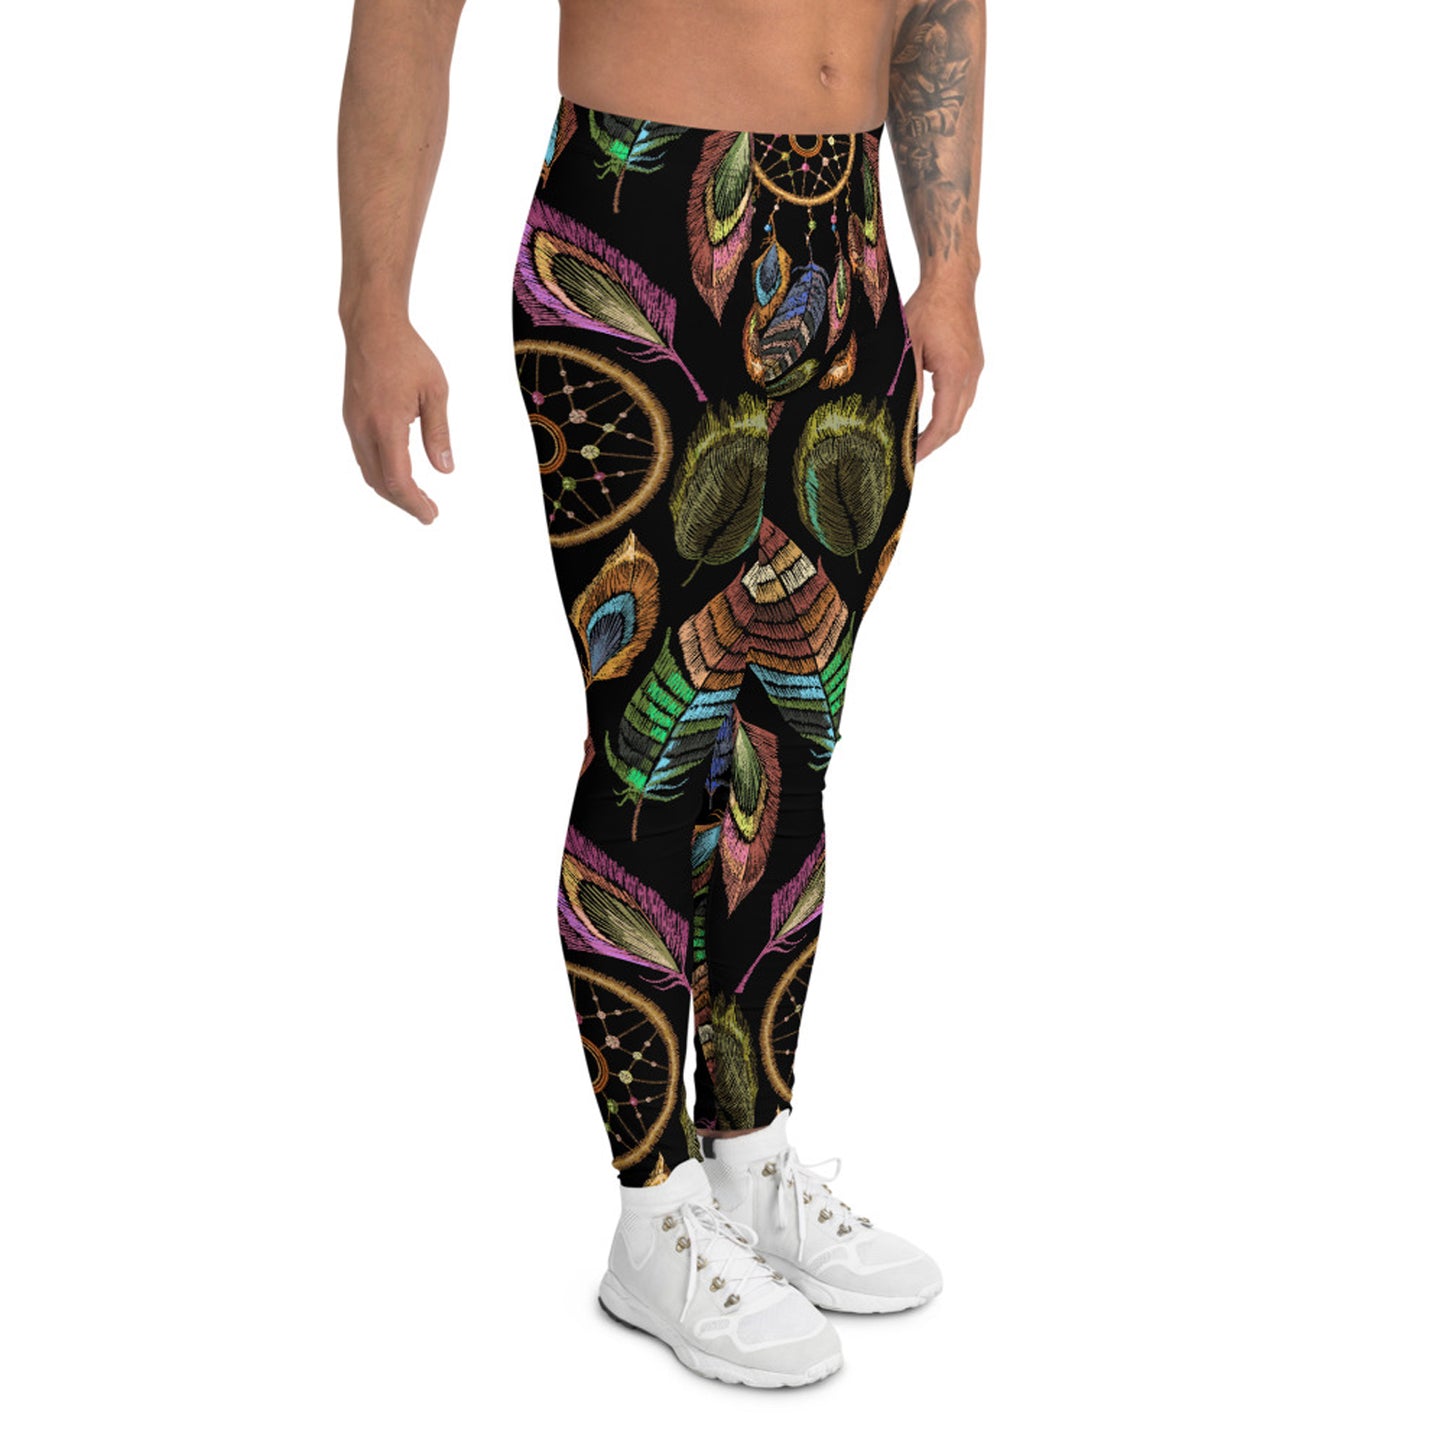 Dreamcatcher Yoga Pants for Men